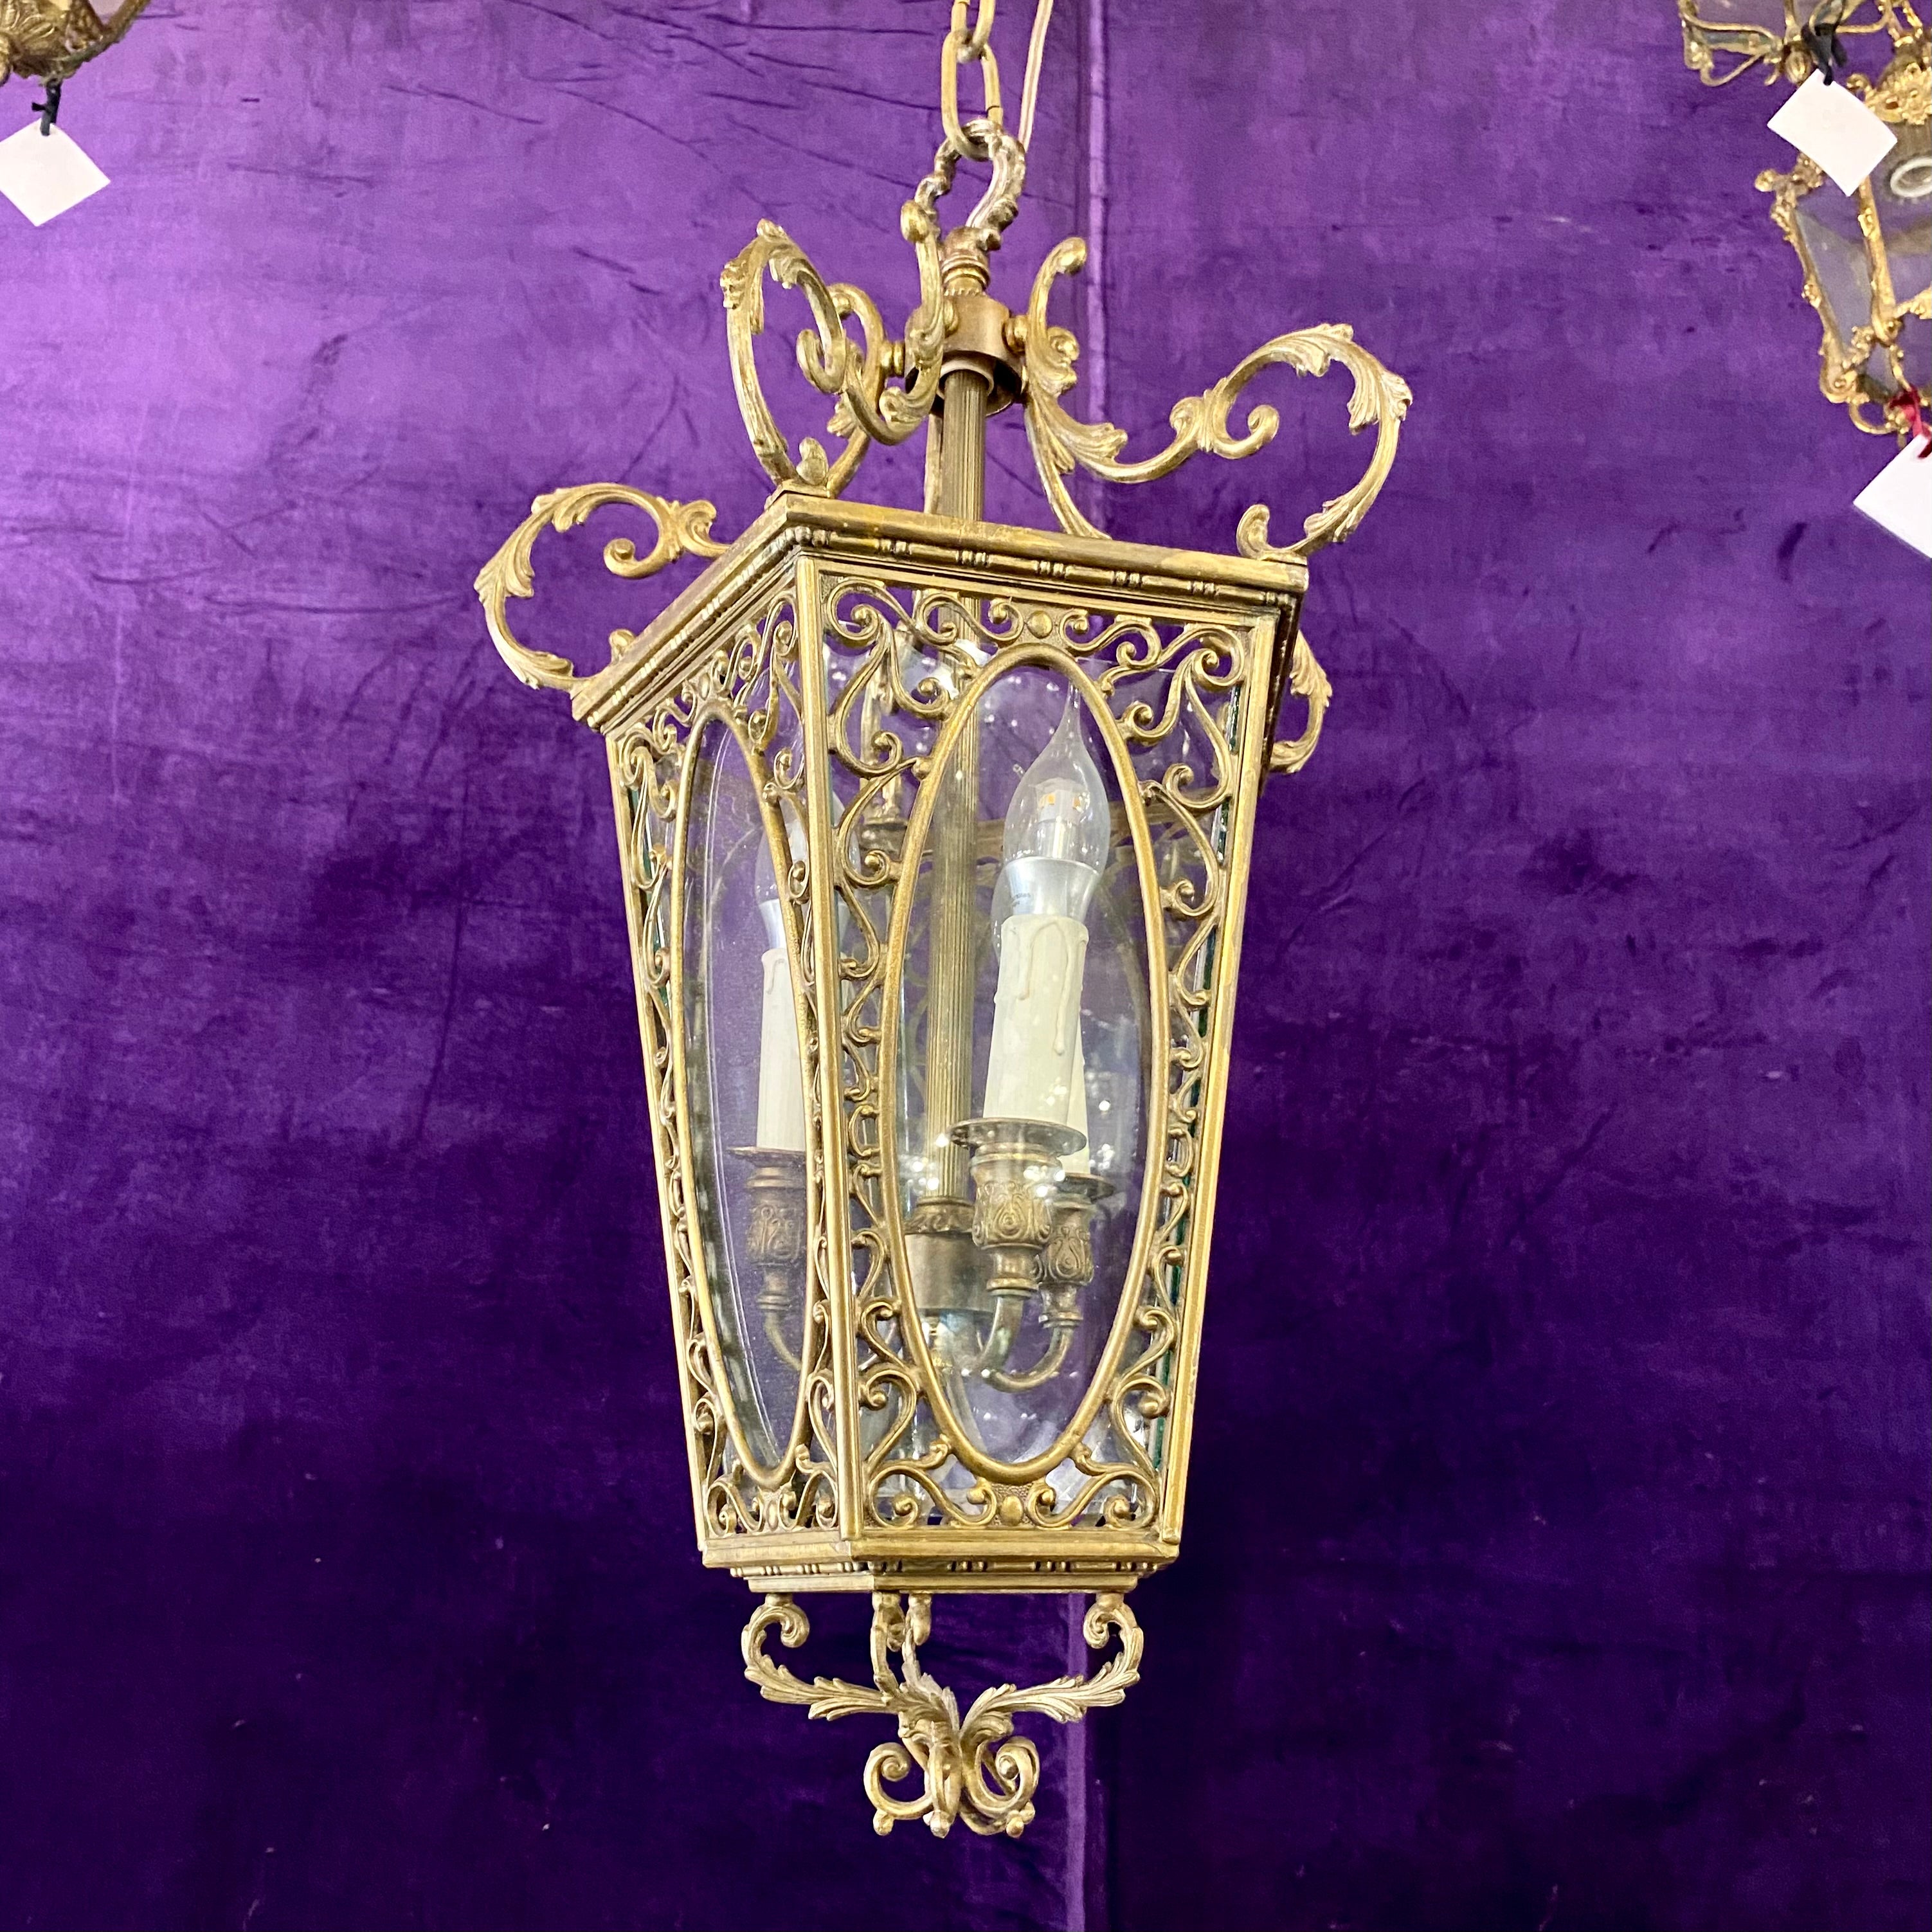 Decorative and Ornate Aged Brass Lantern